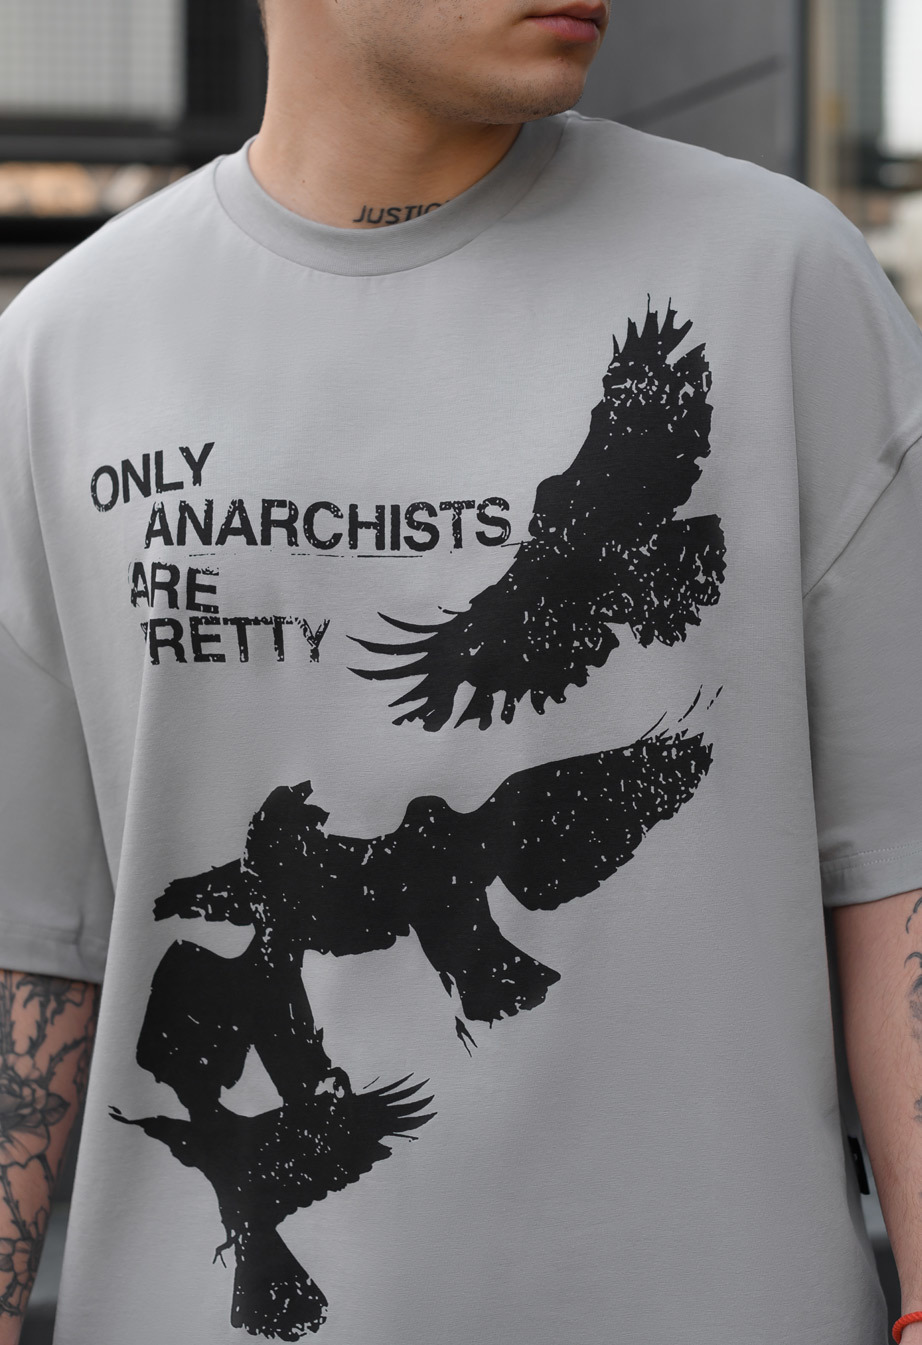 Koszulka Staff only anarchists oversize